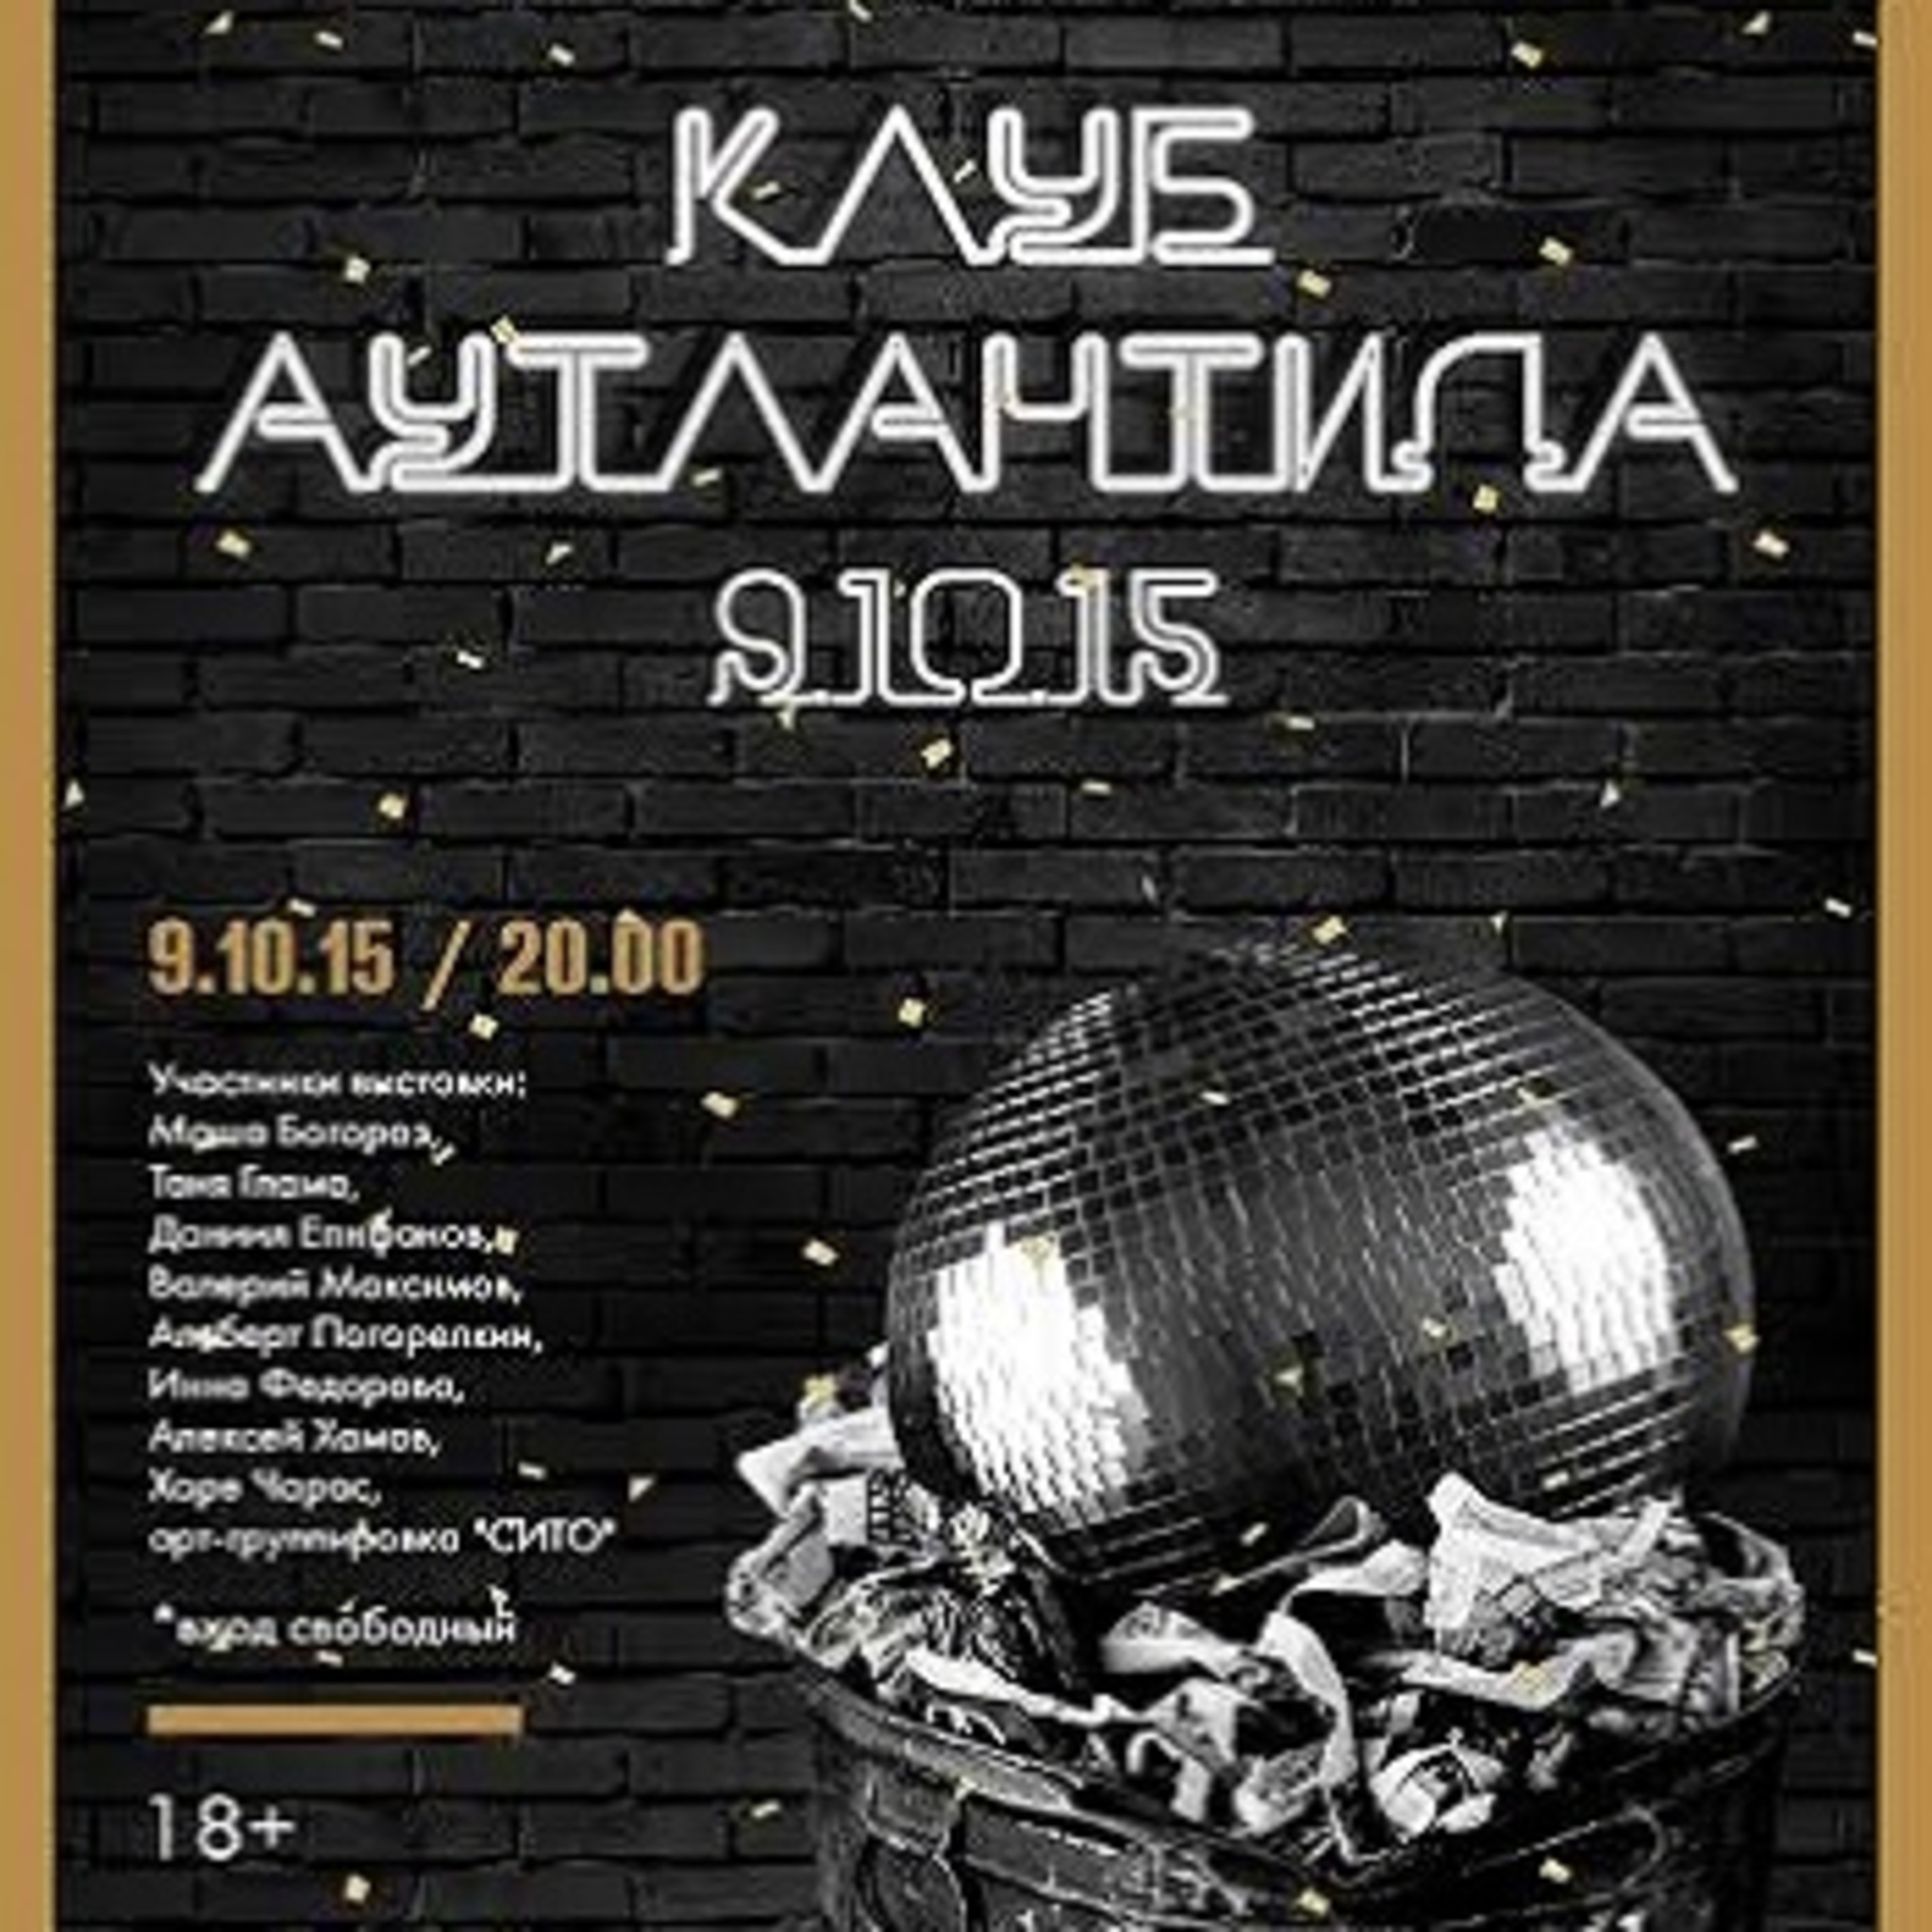 Lab exhibition Rostov artists’ club Atlantis